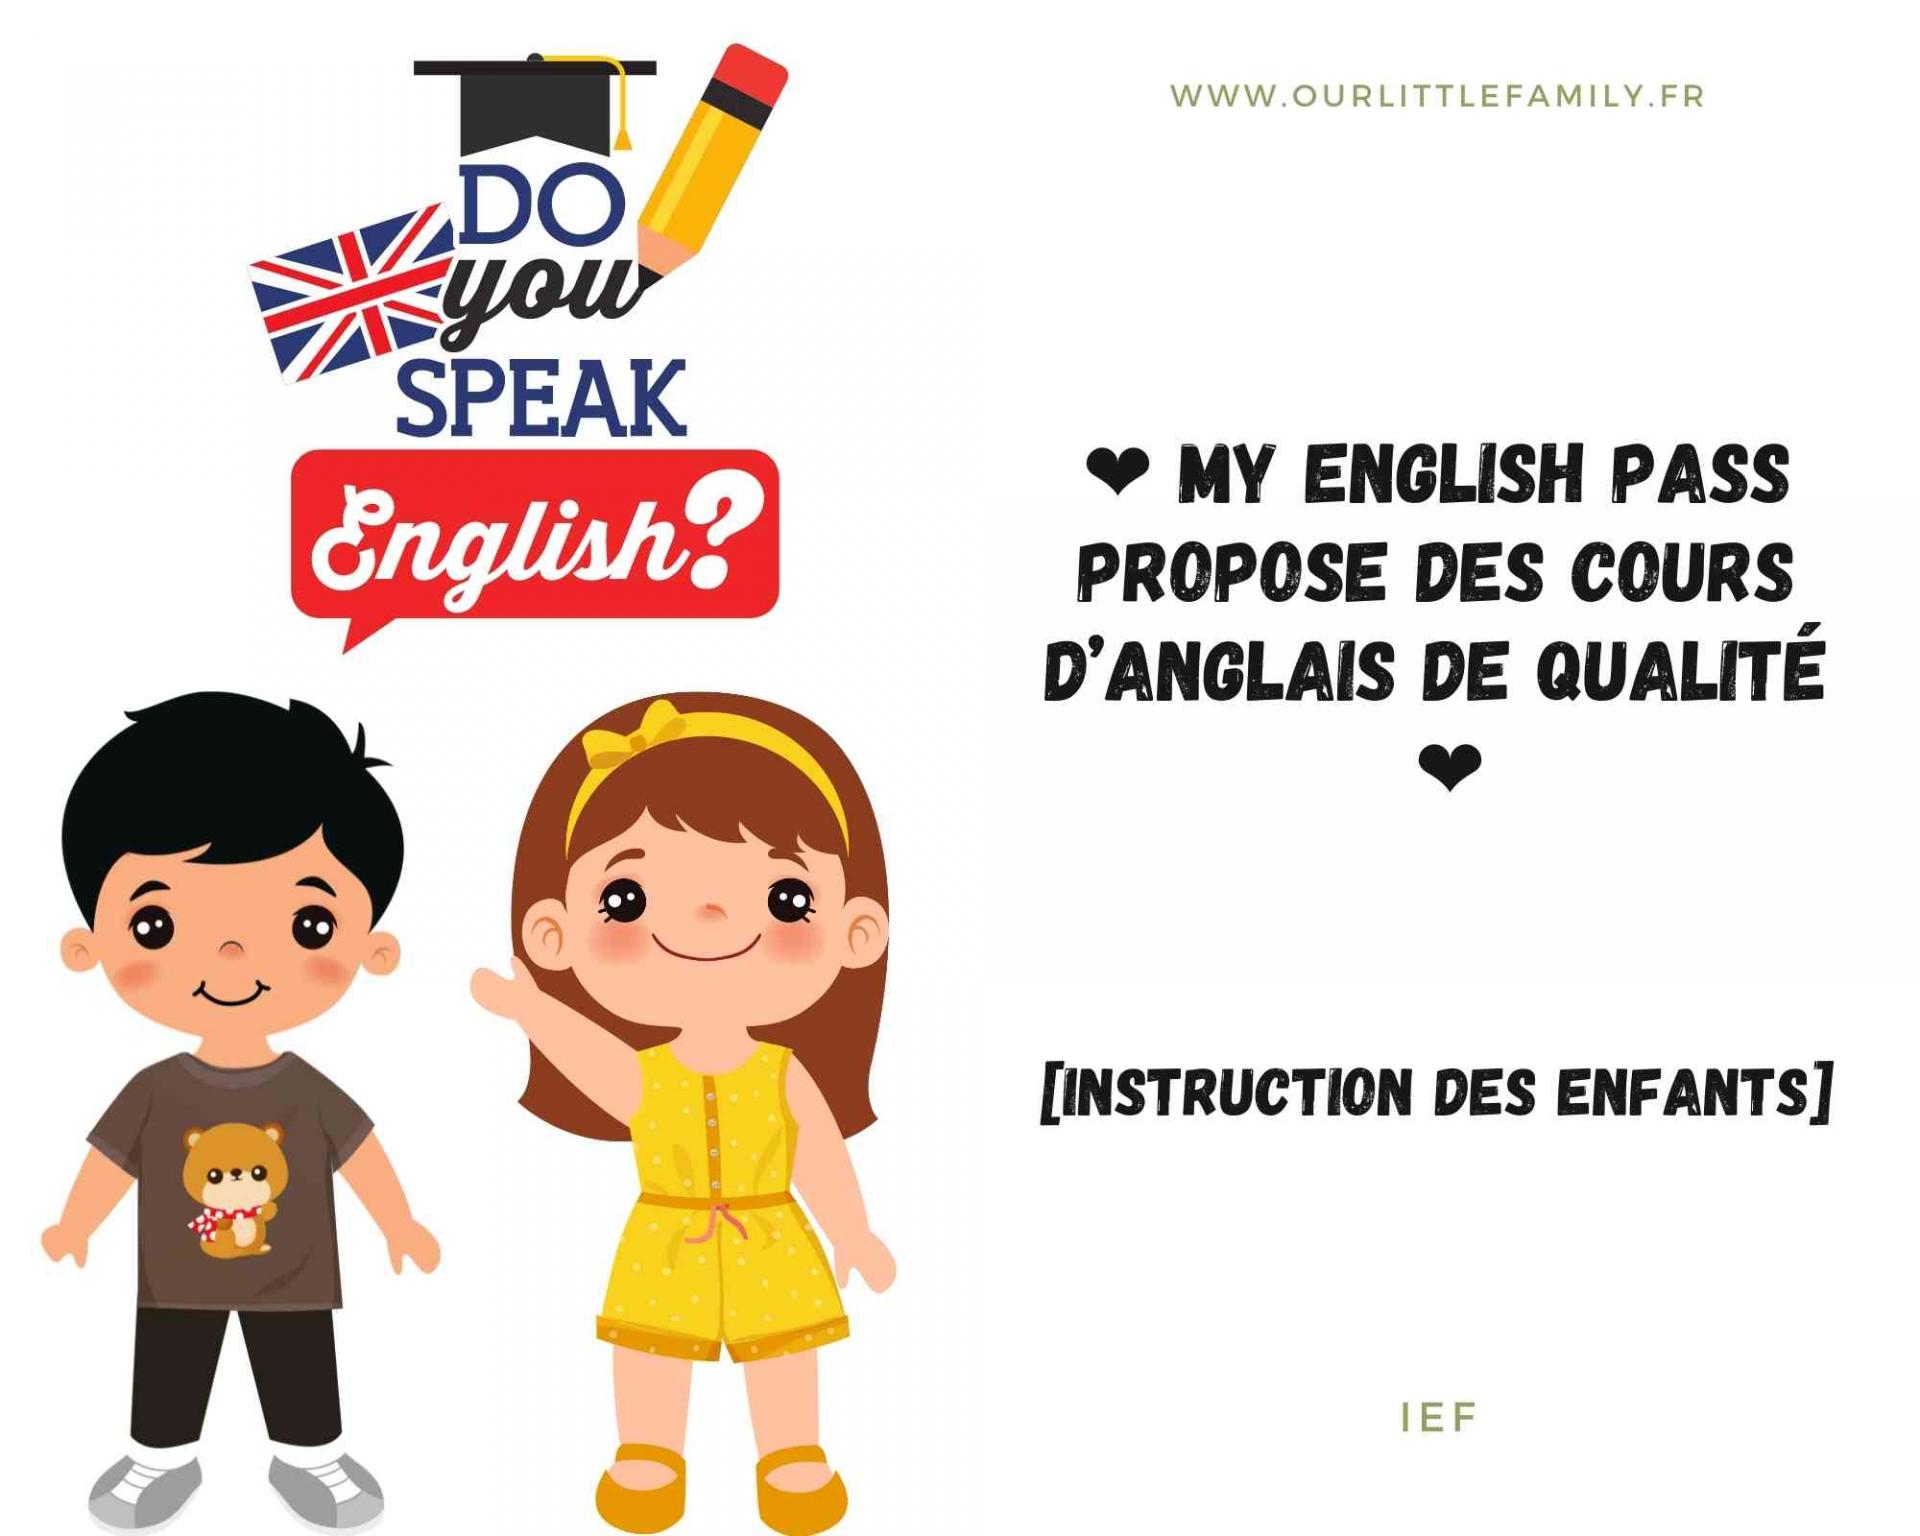 My english pass propose des cours d anglais de qualite